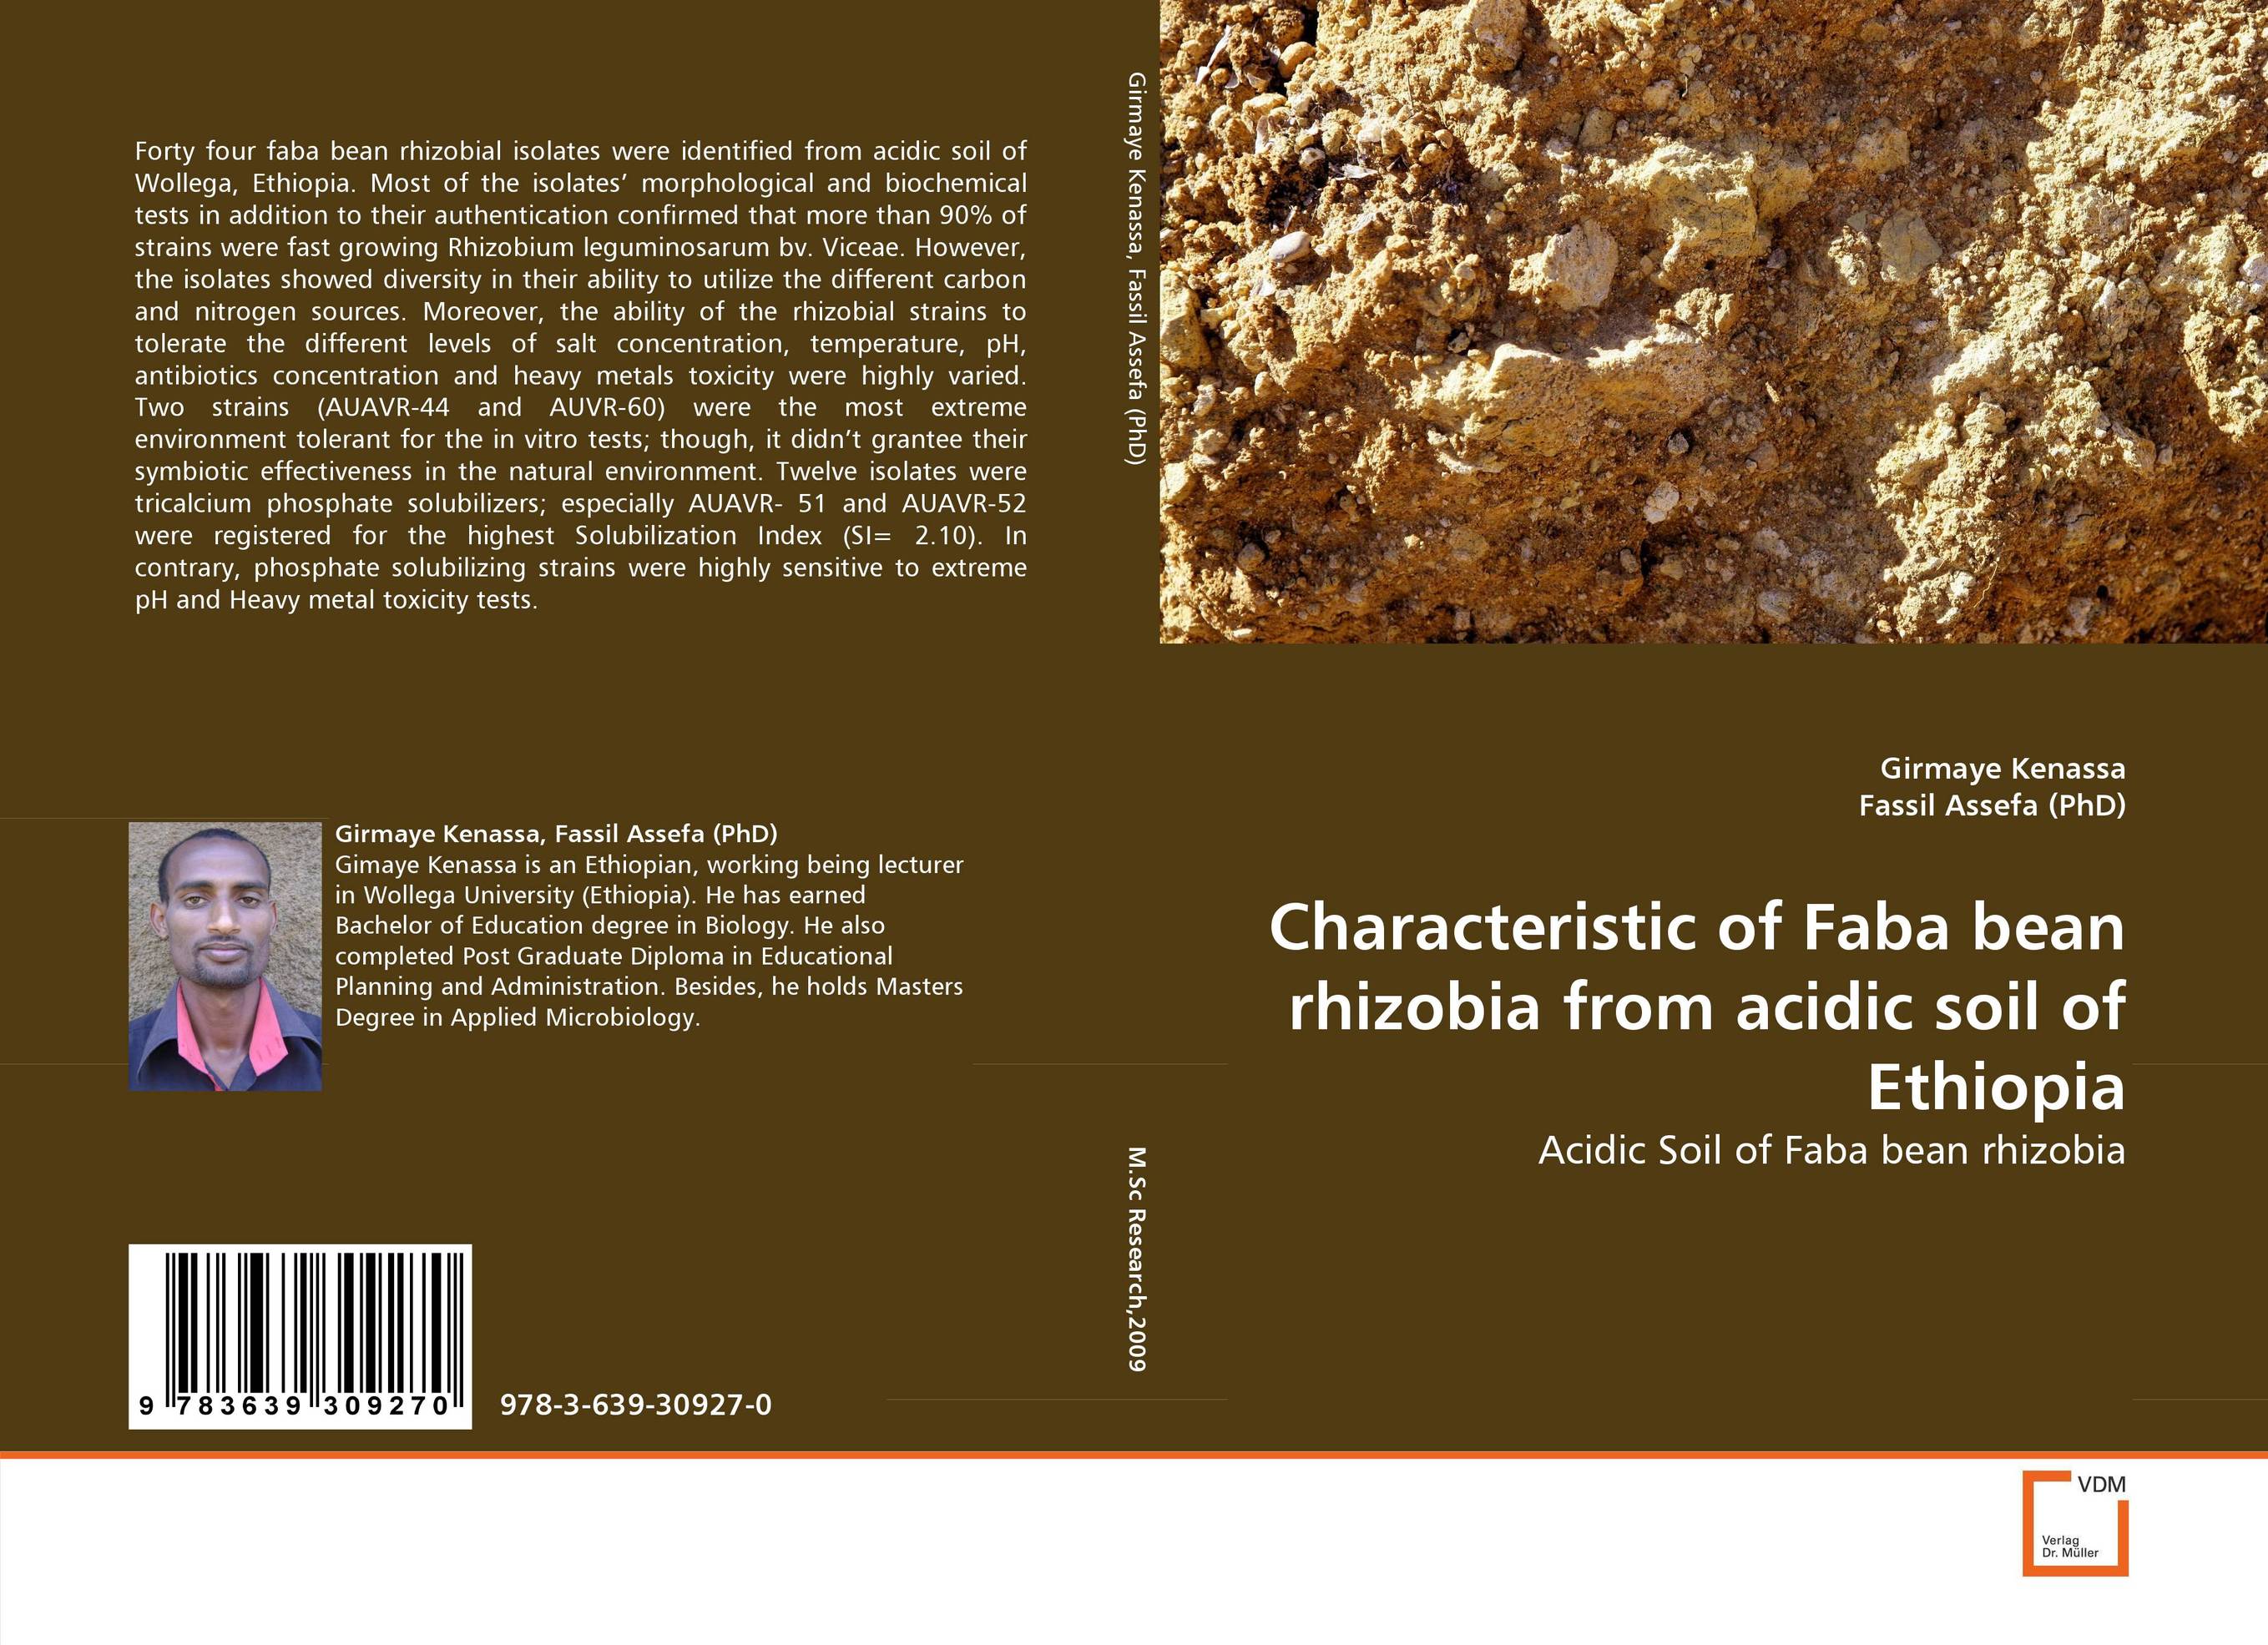 Characteristic of Faba bean rhizobia from acidic soil of Ethiopia